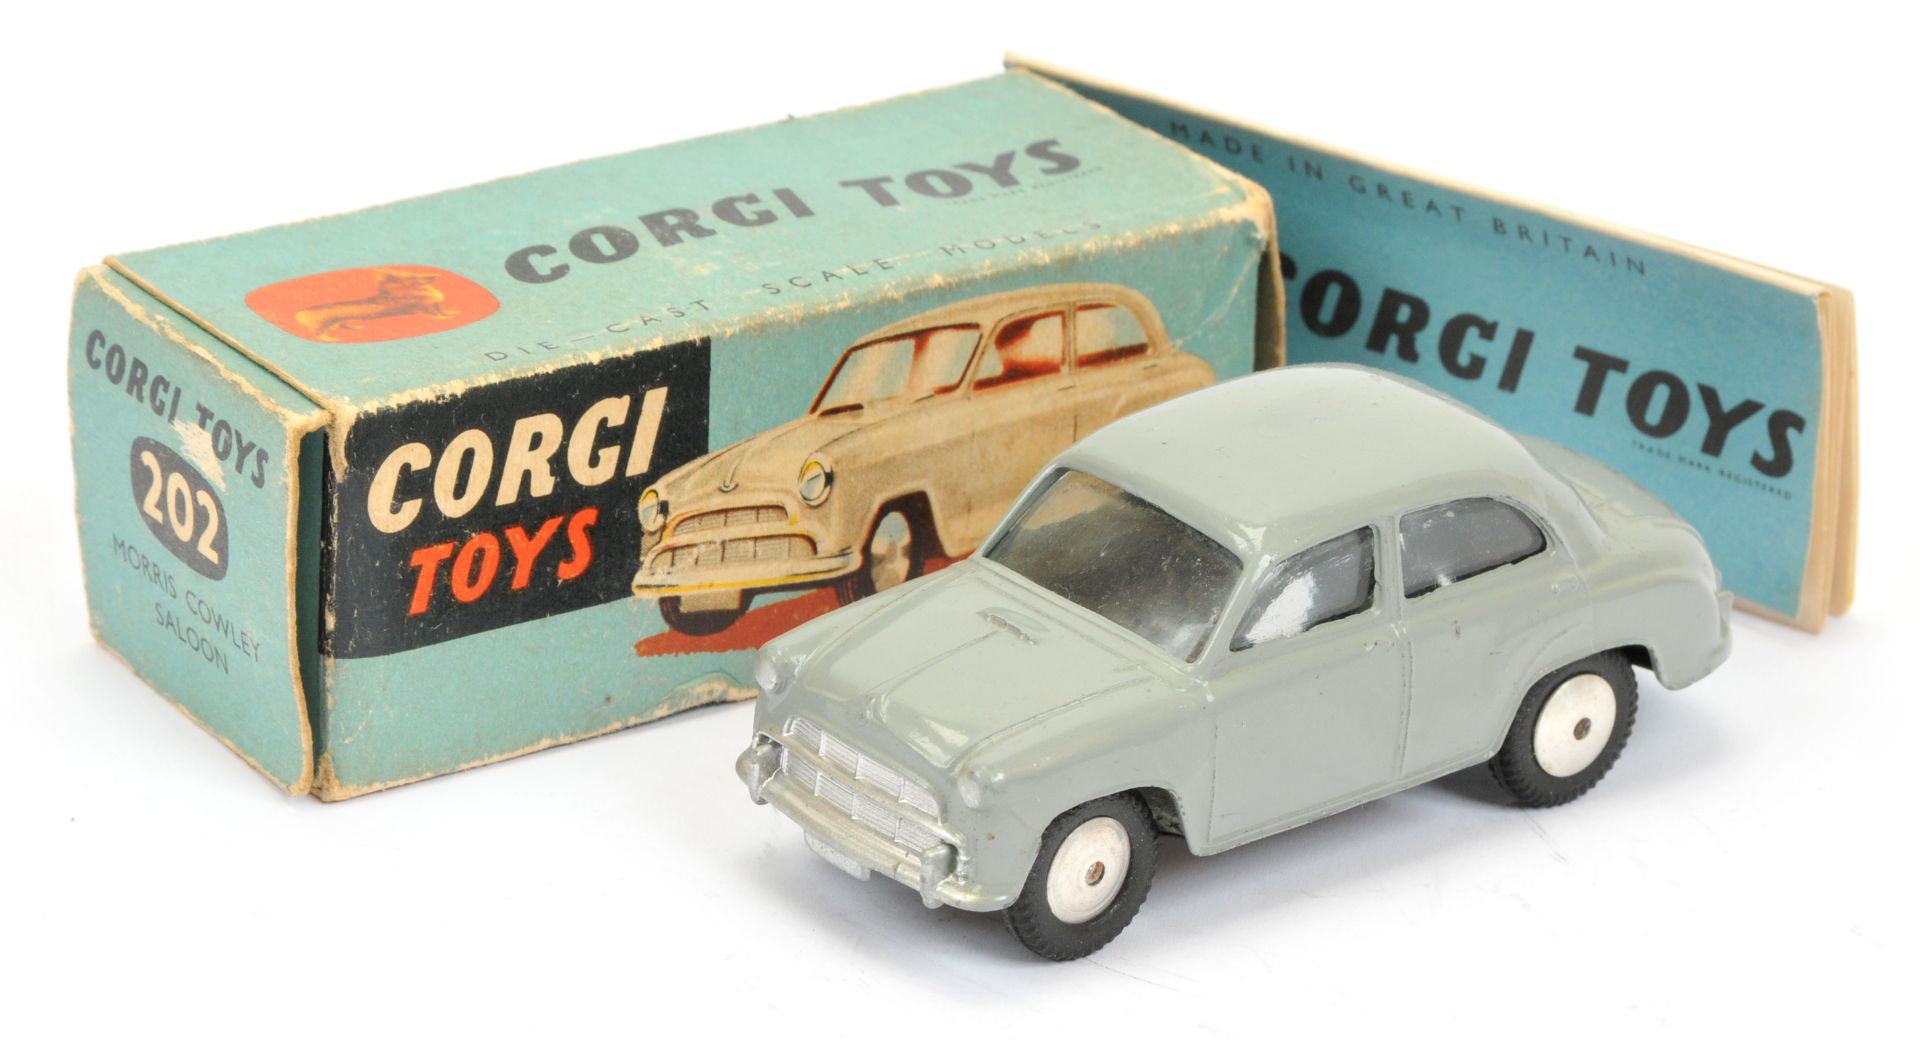 Corgi Toys 202 Morris Cowley Saloon - Grey, silver trim and flat spun hubs